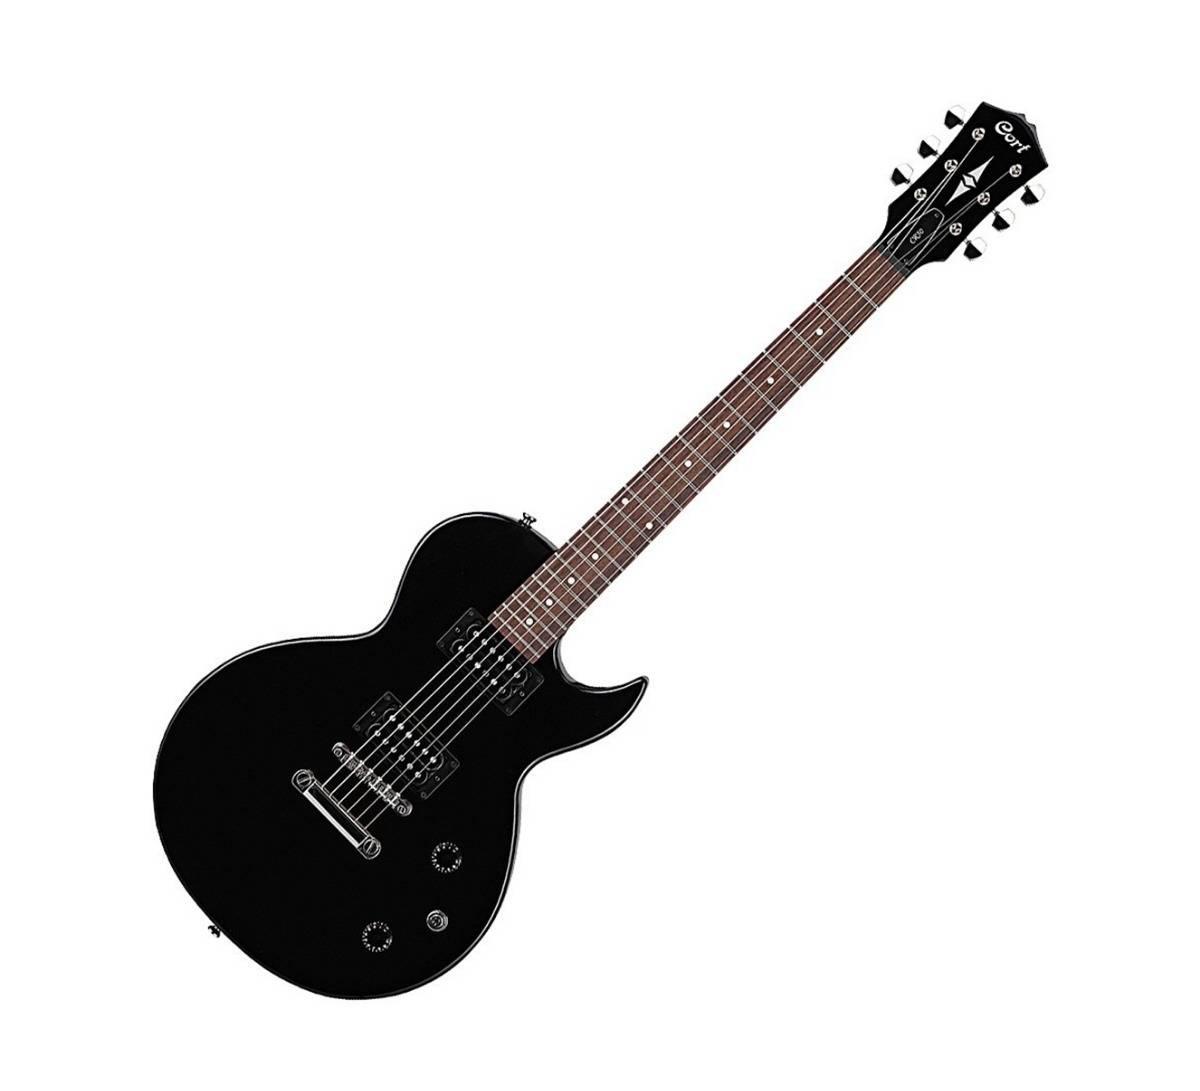 Cort - Guitarra Eléctrica CR, Color: Negra Mod.CR50 BK_76